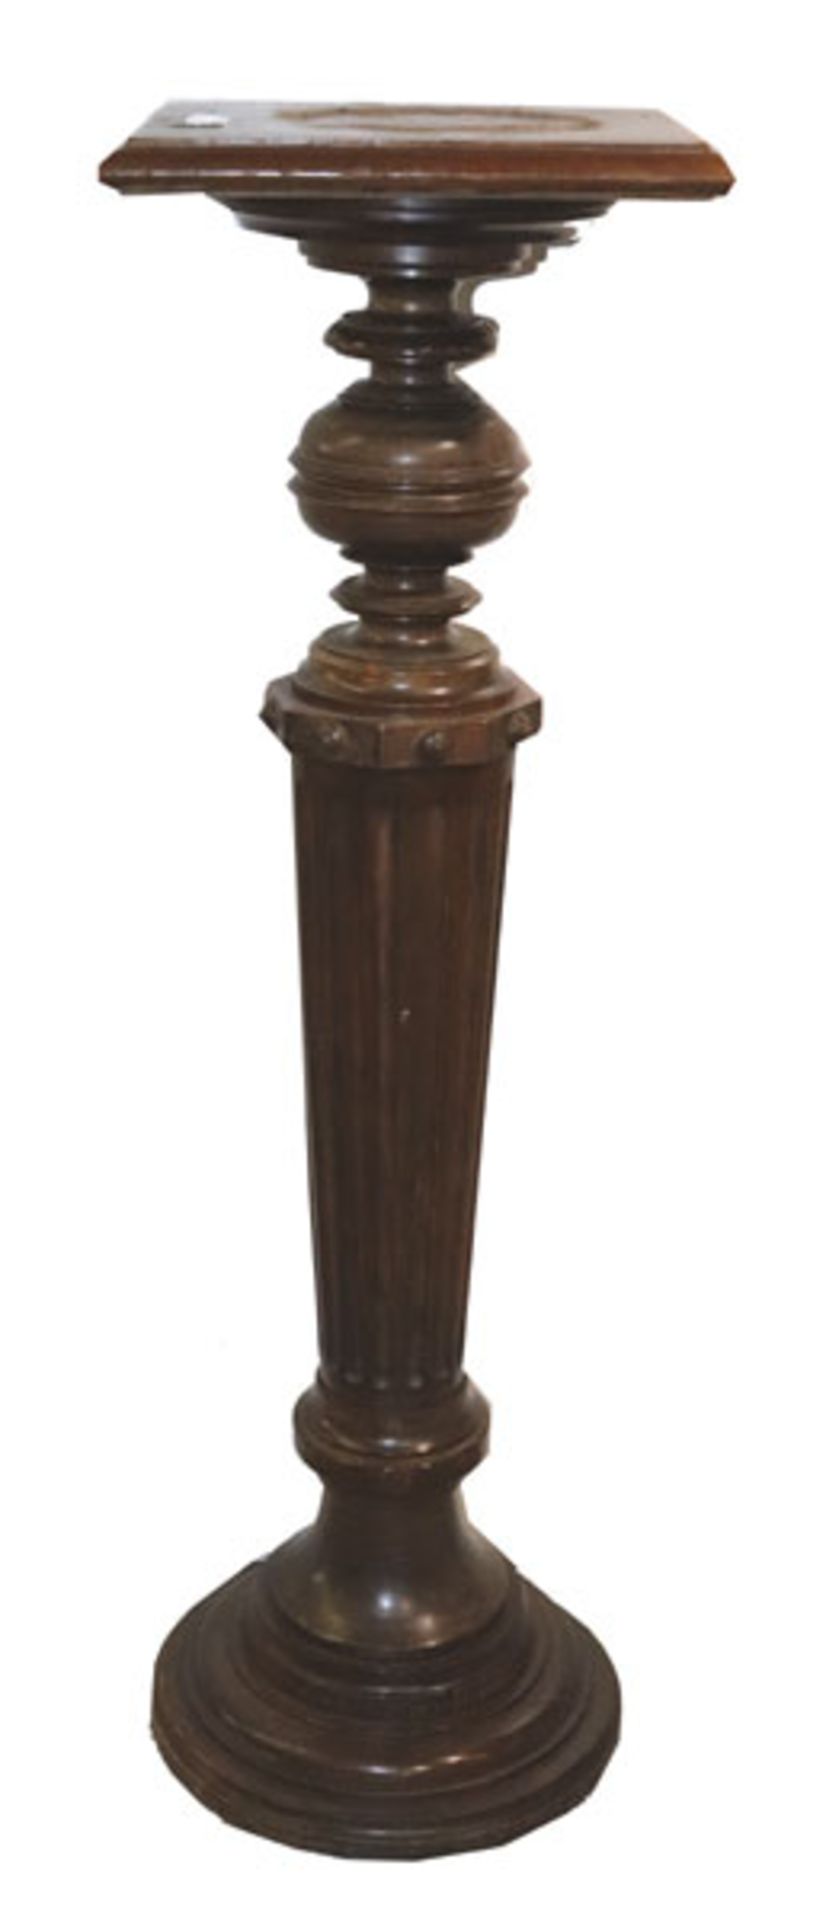 Holz Blumensäule, gedrechselter Fuß, H 113 cm, D 43 cm, Gebrauchsspuren, Platte beschädigt